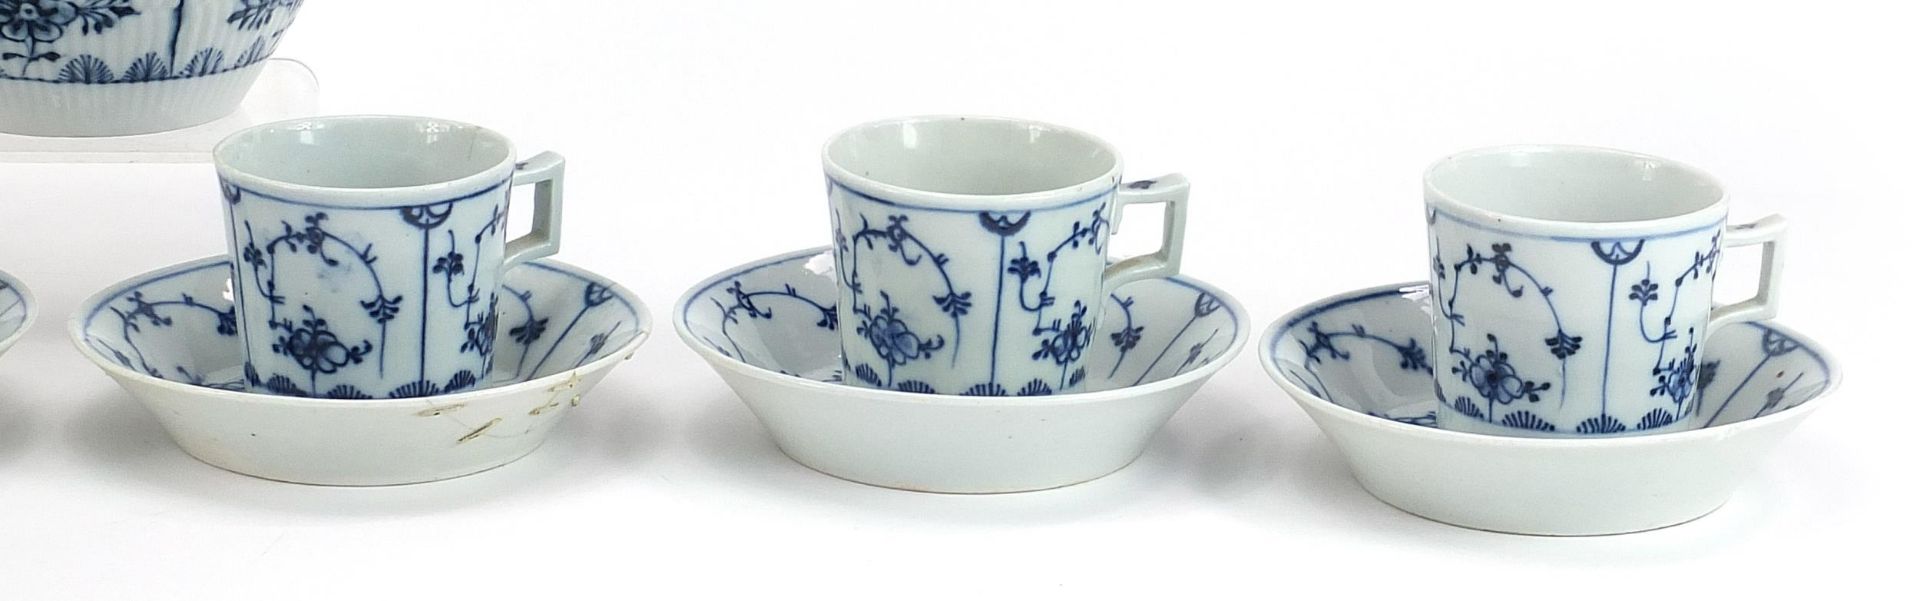 19th century Meissen style continental porcelain six place tea service hand painted with flowers, - Bild 3 aus 4